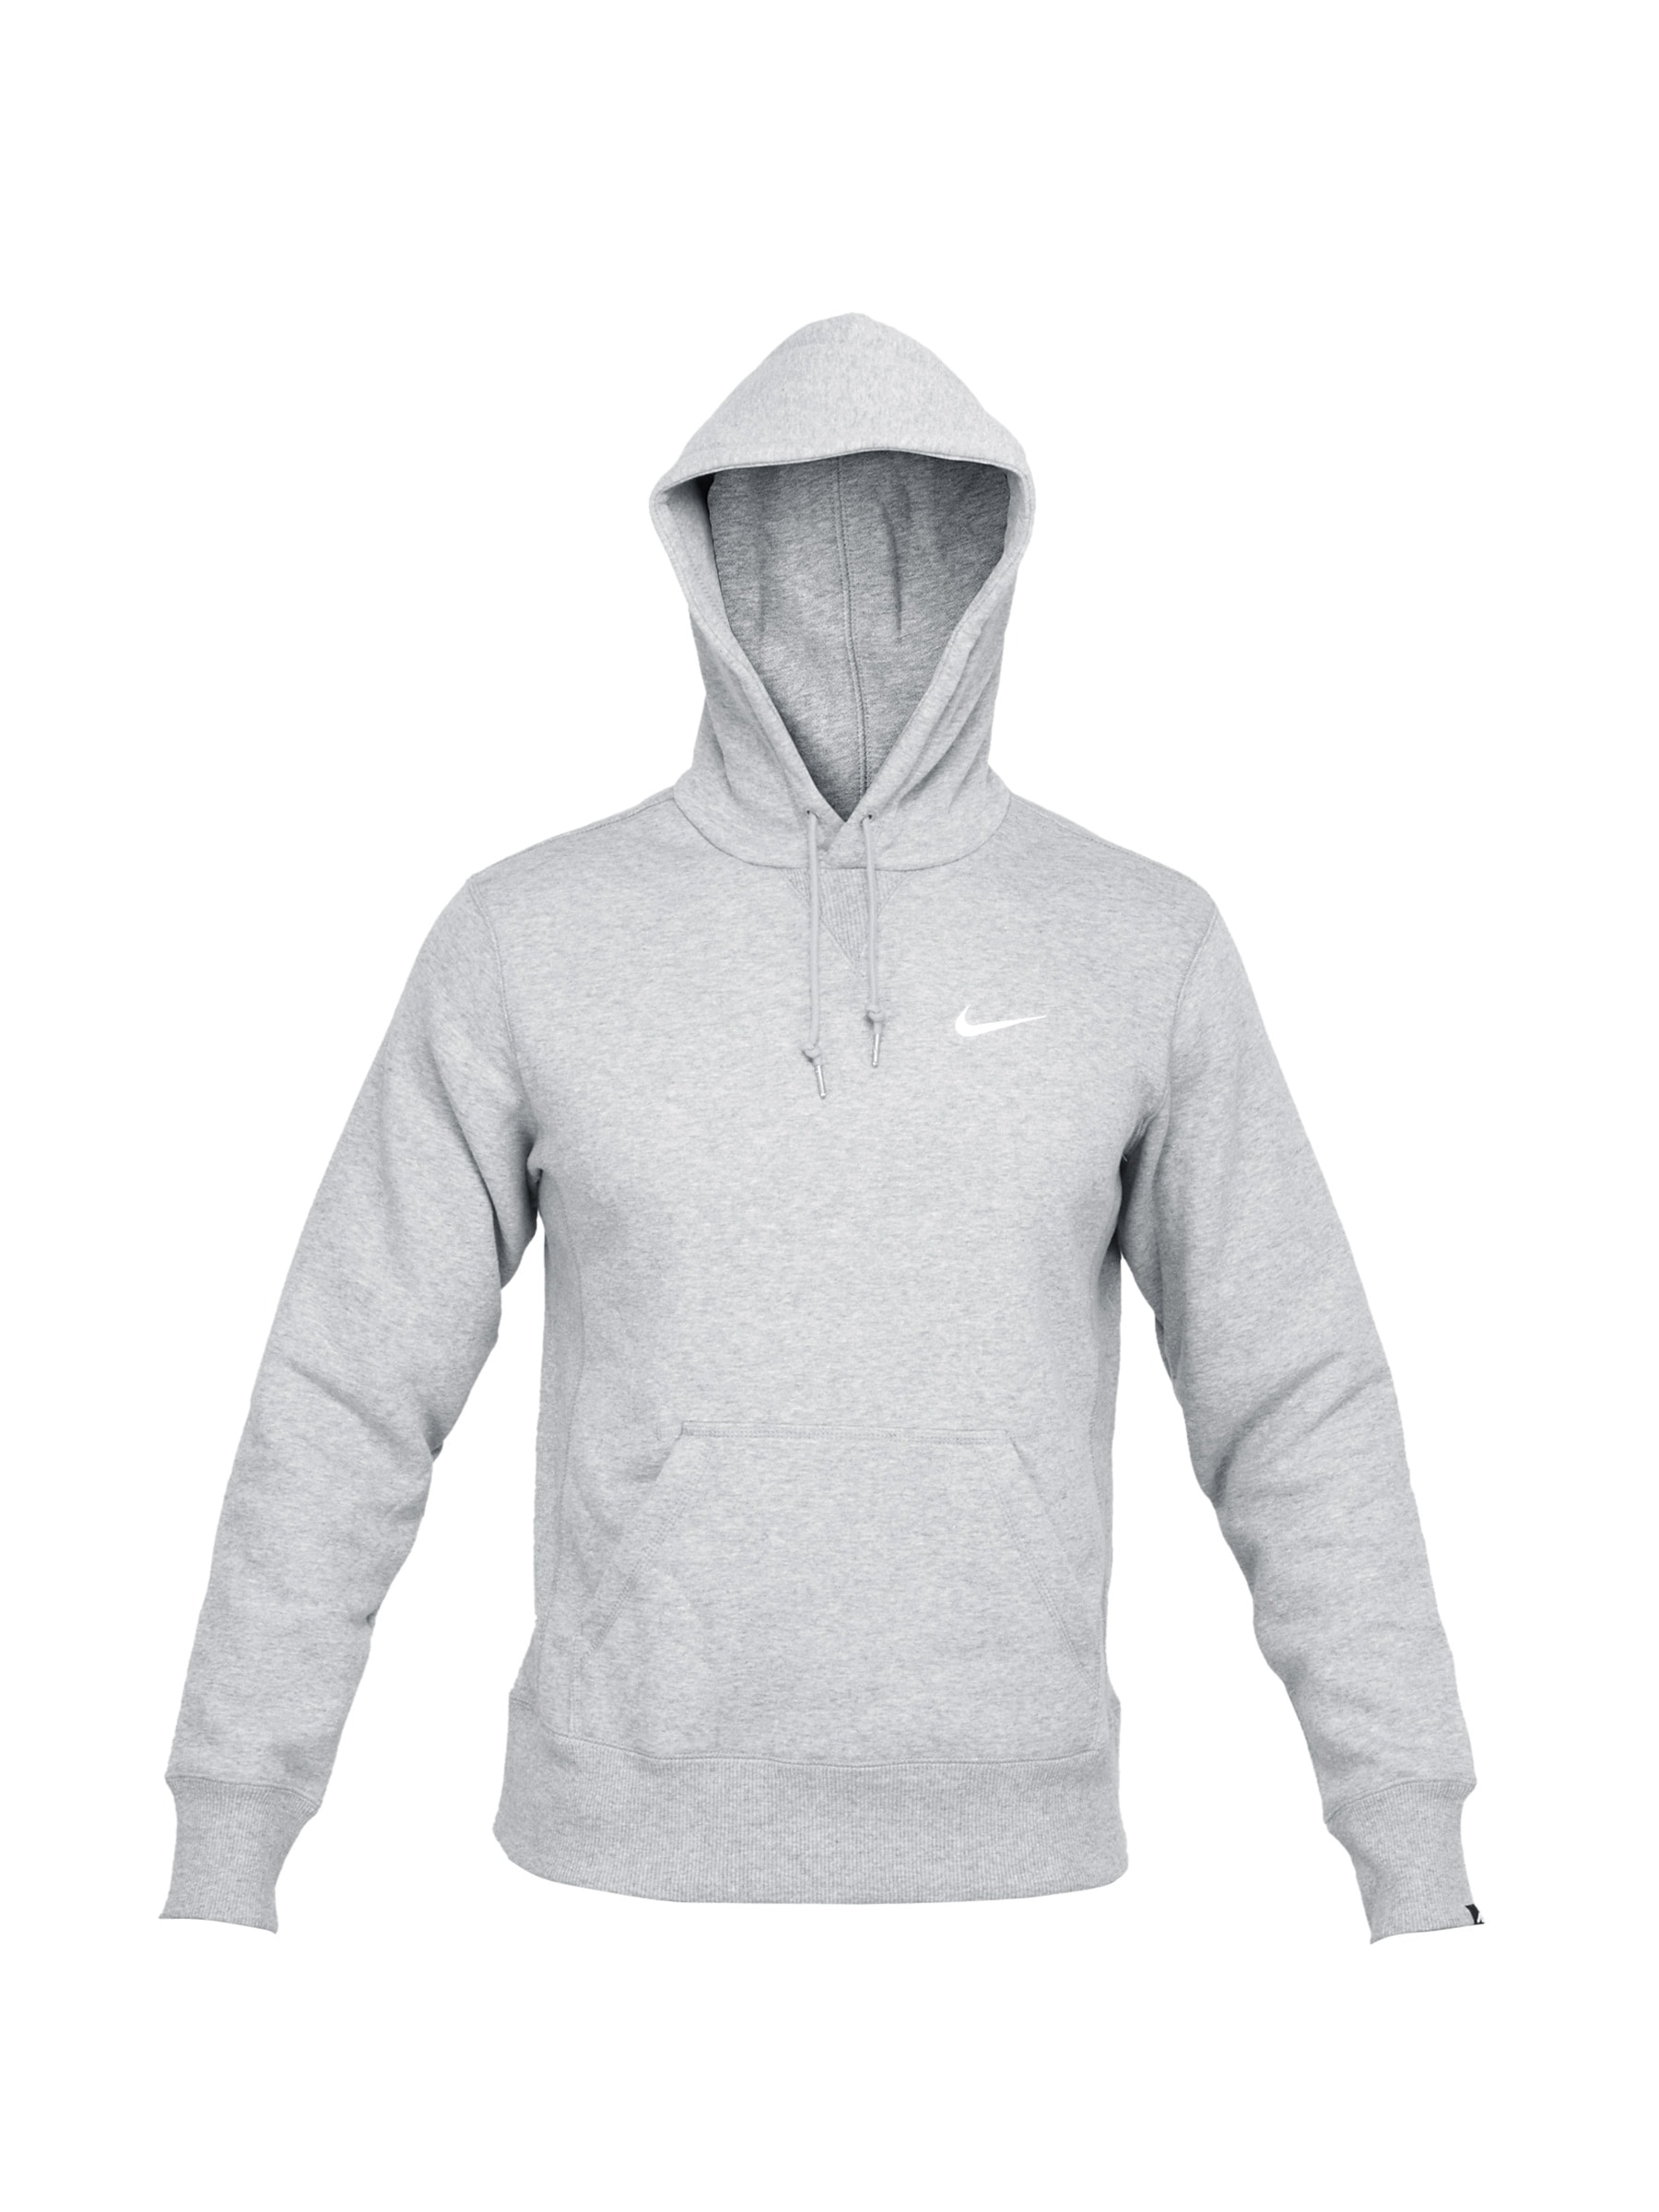 Nike Men Casual Grey Sweatshirts